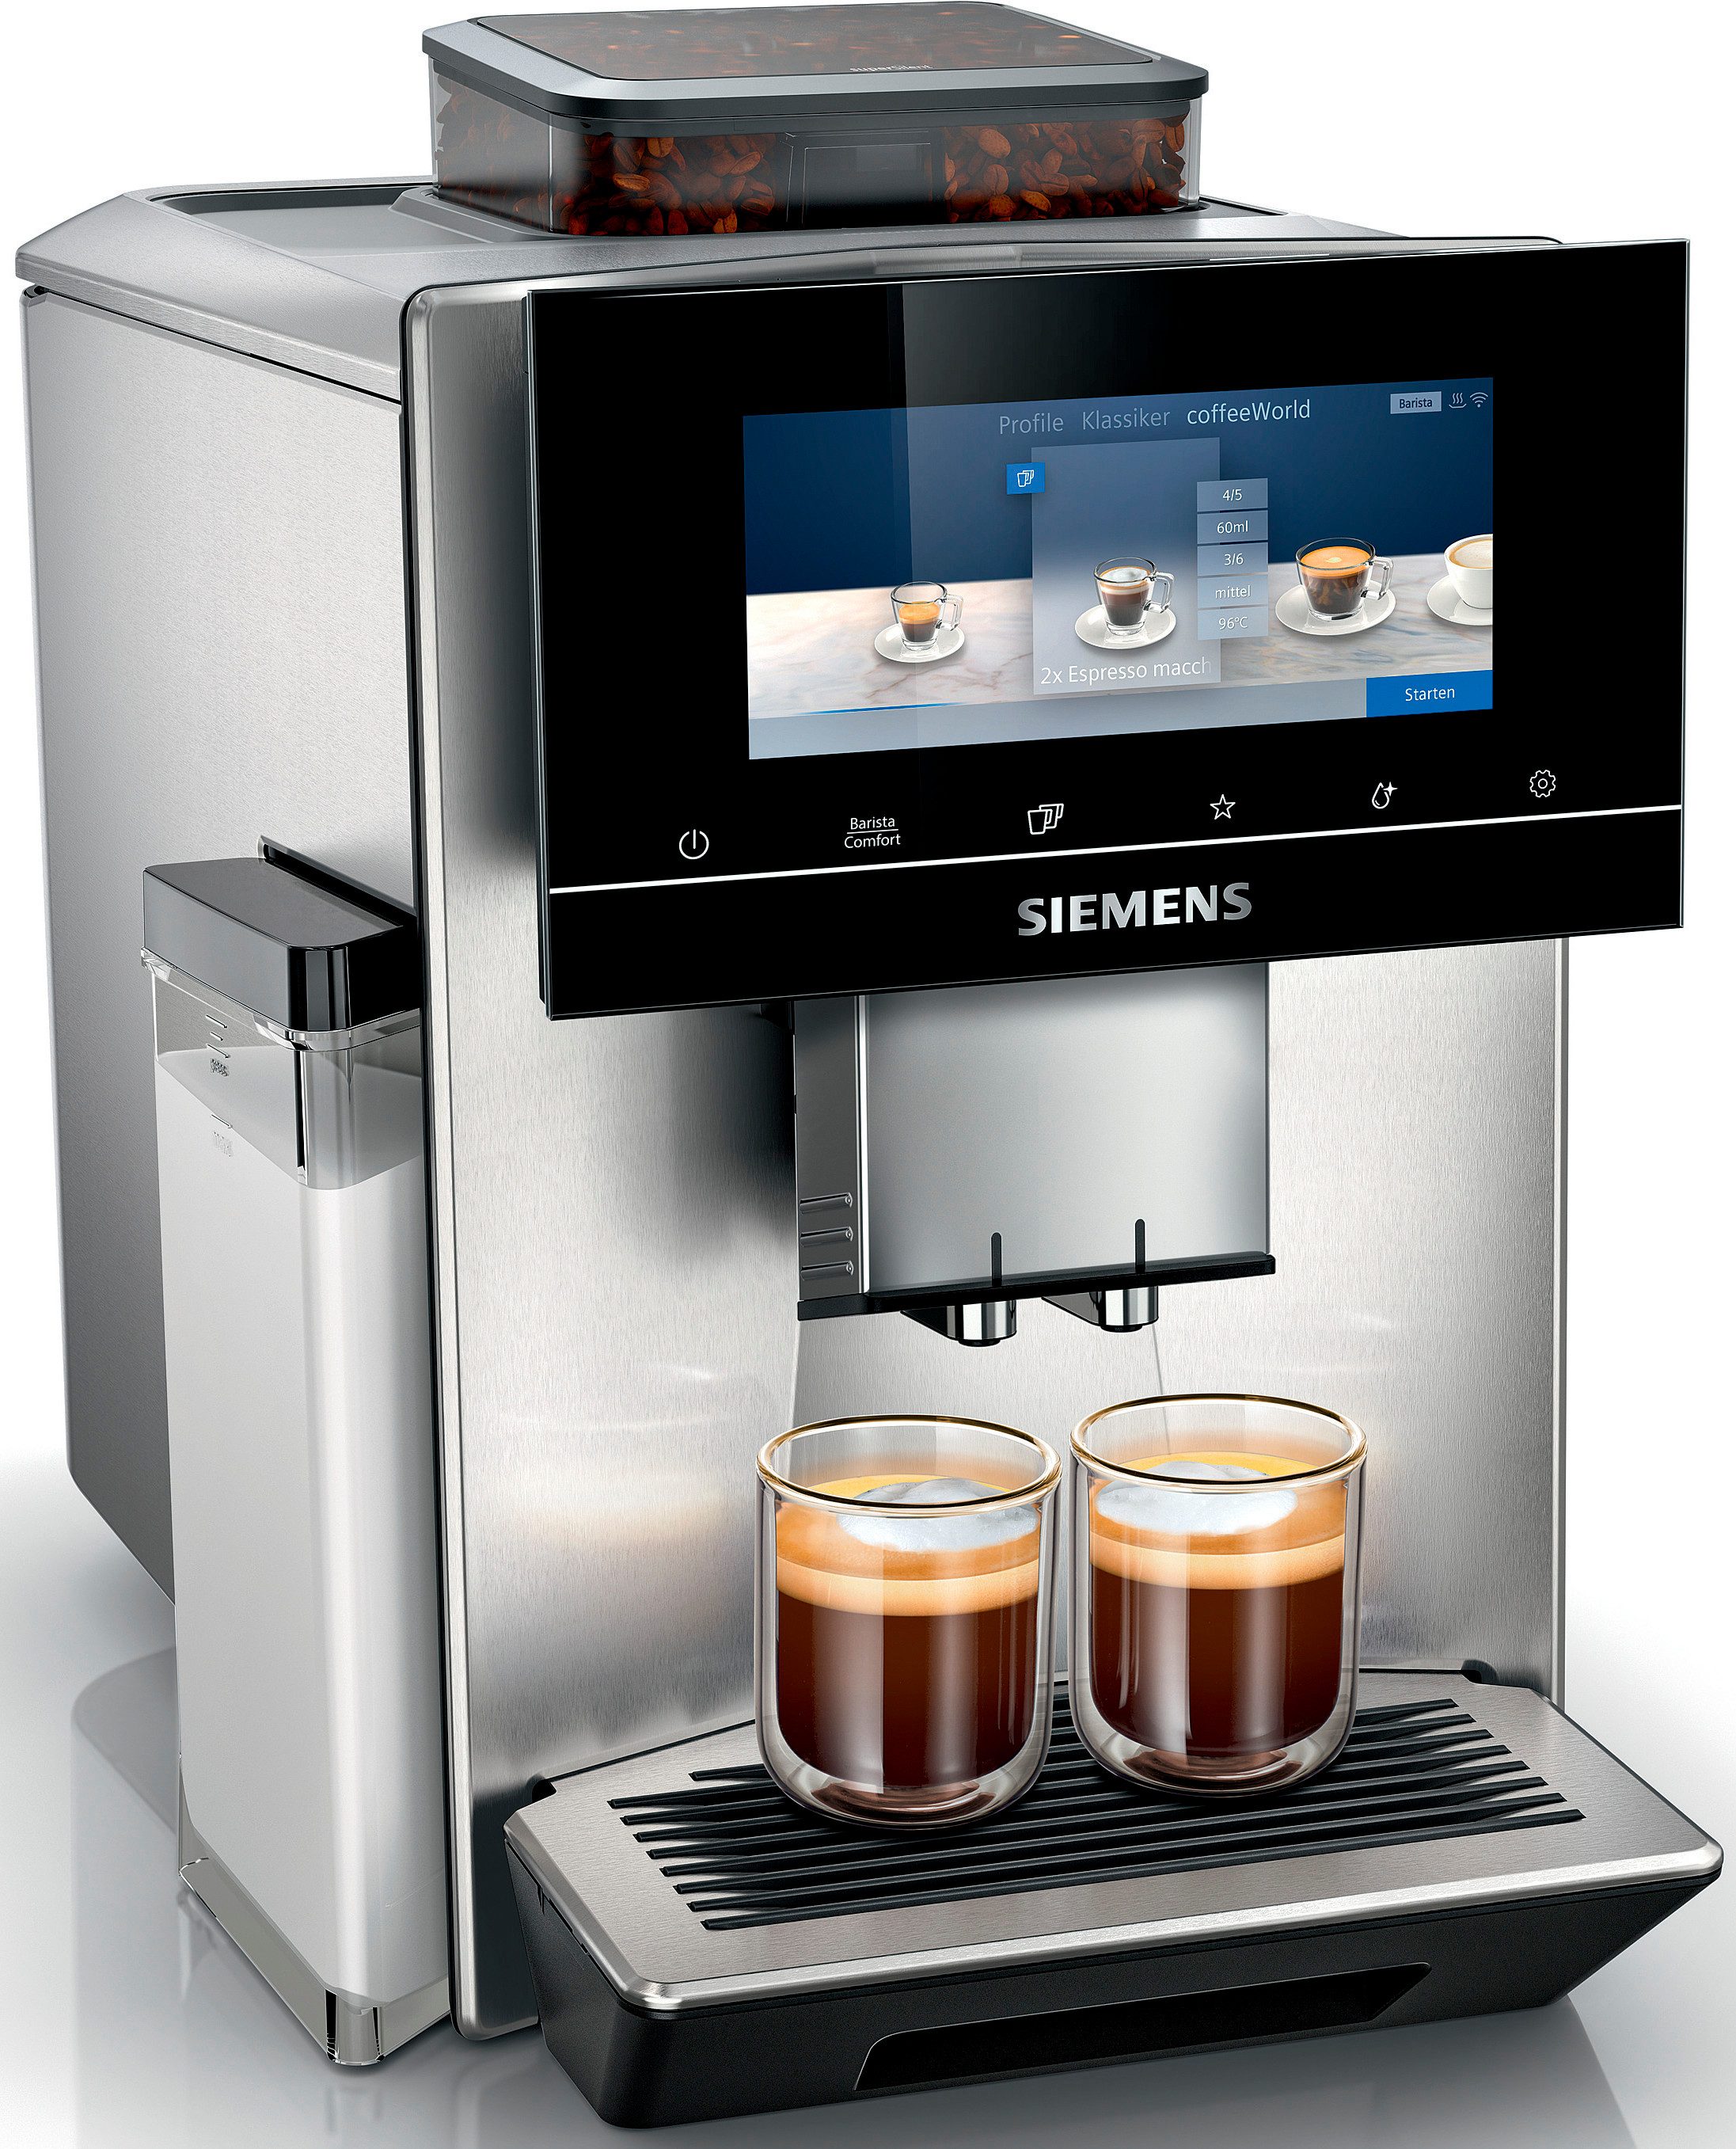 SIEMENS Kaffeevollautomat EQ900 TQ905D03, intuitives 6,8" TFT-Display, Barista-Modus, AromaBoost, App-Steuerung, Geräuschreduzierung,10 Profile, edelstahl